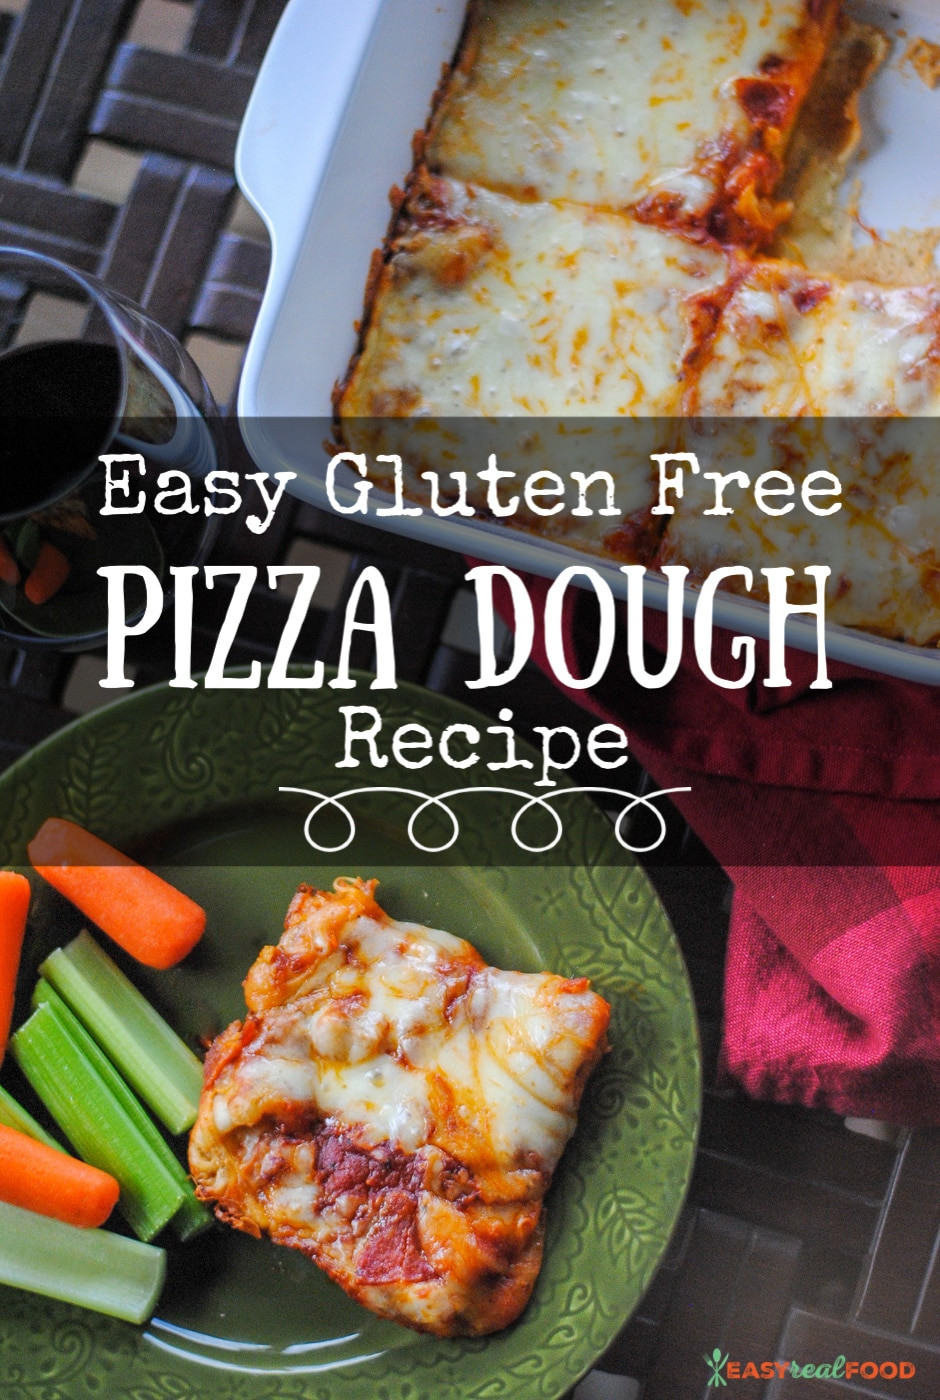 Yeast Free Pizza Dough Recipe
 Easy Gluten Free Pizza Dough Recipe without yeast Easy